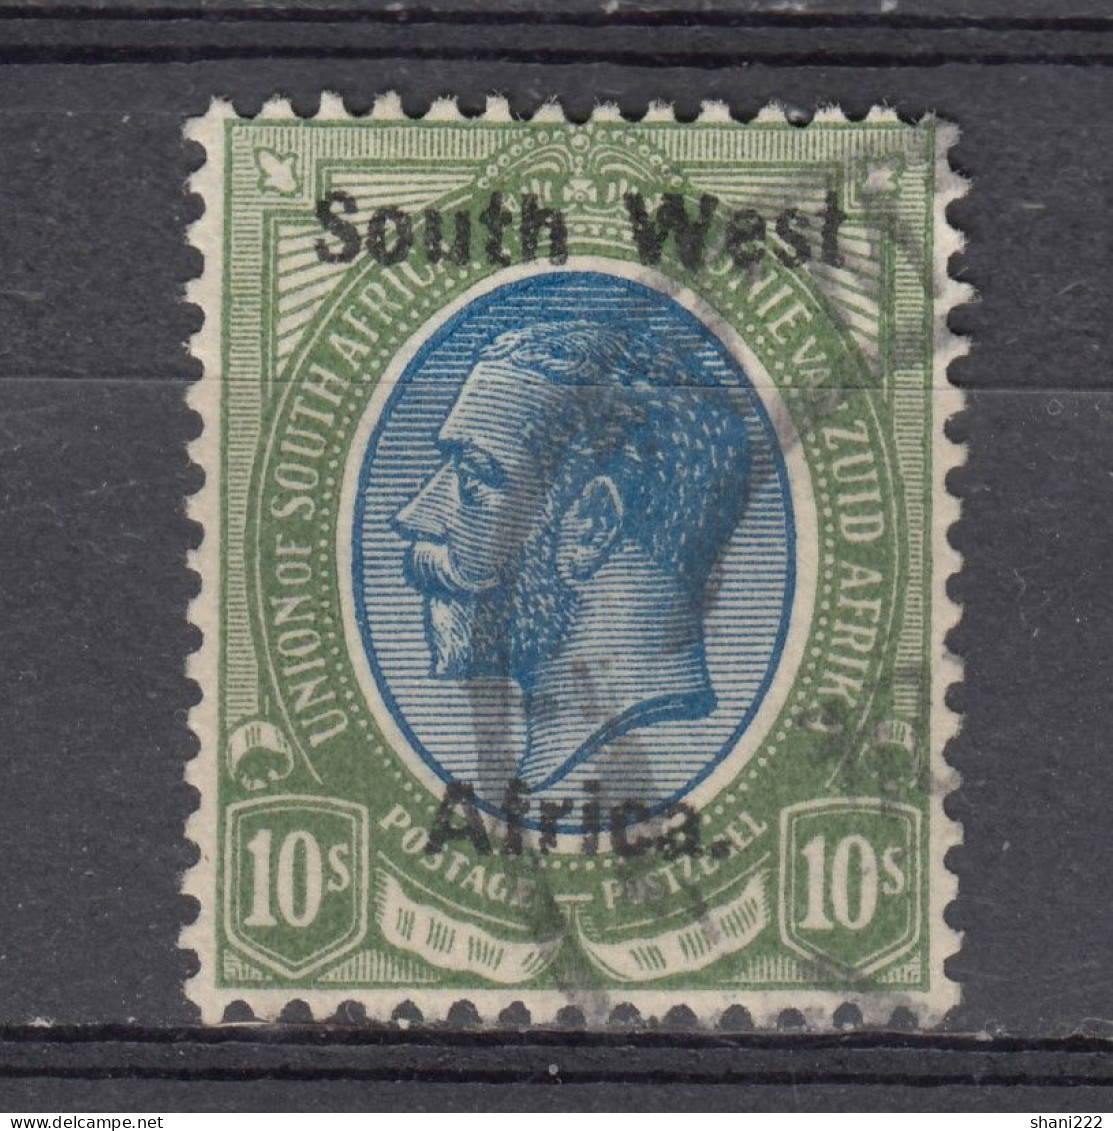 South West Africa 1923 - Overprinted 10/-,  Vf Used (e-741) - Afrique Du Sud-Ouest (1923-1990)